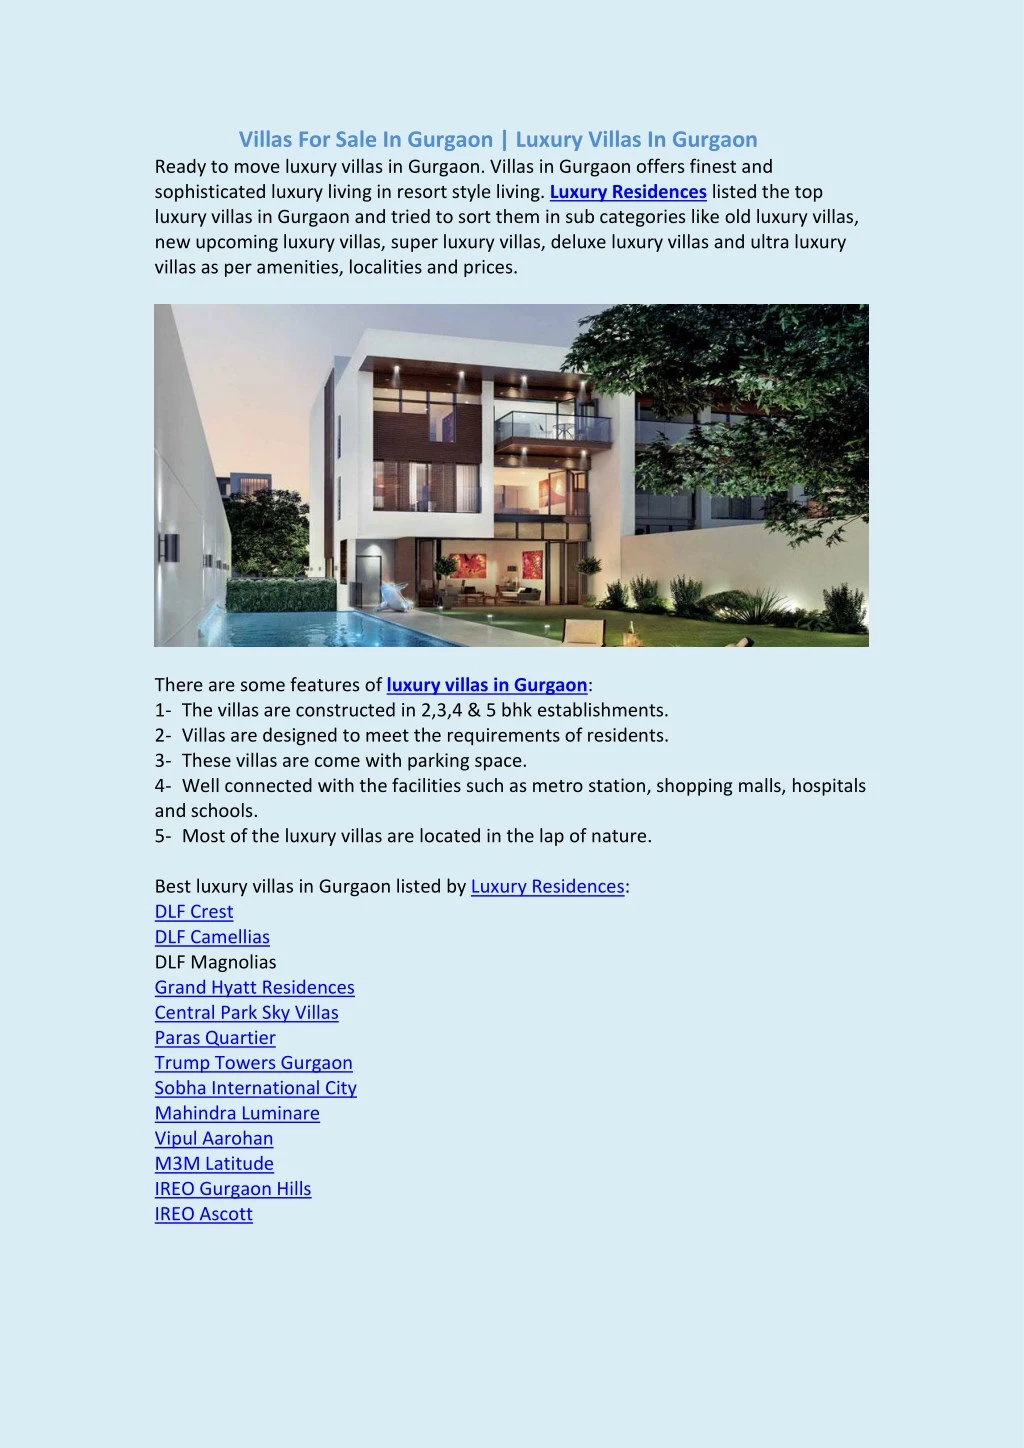 villas for sale in gurgaon luxury villas